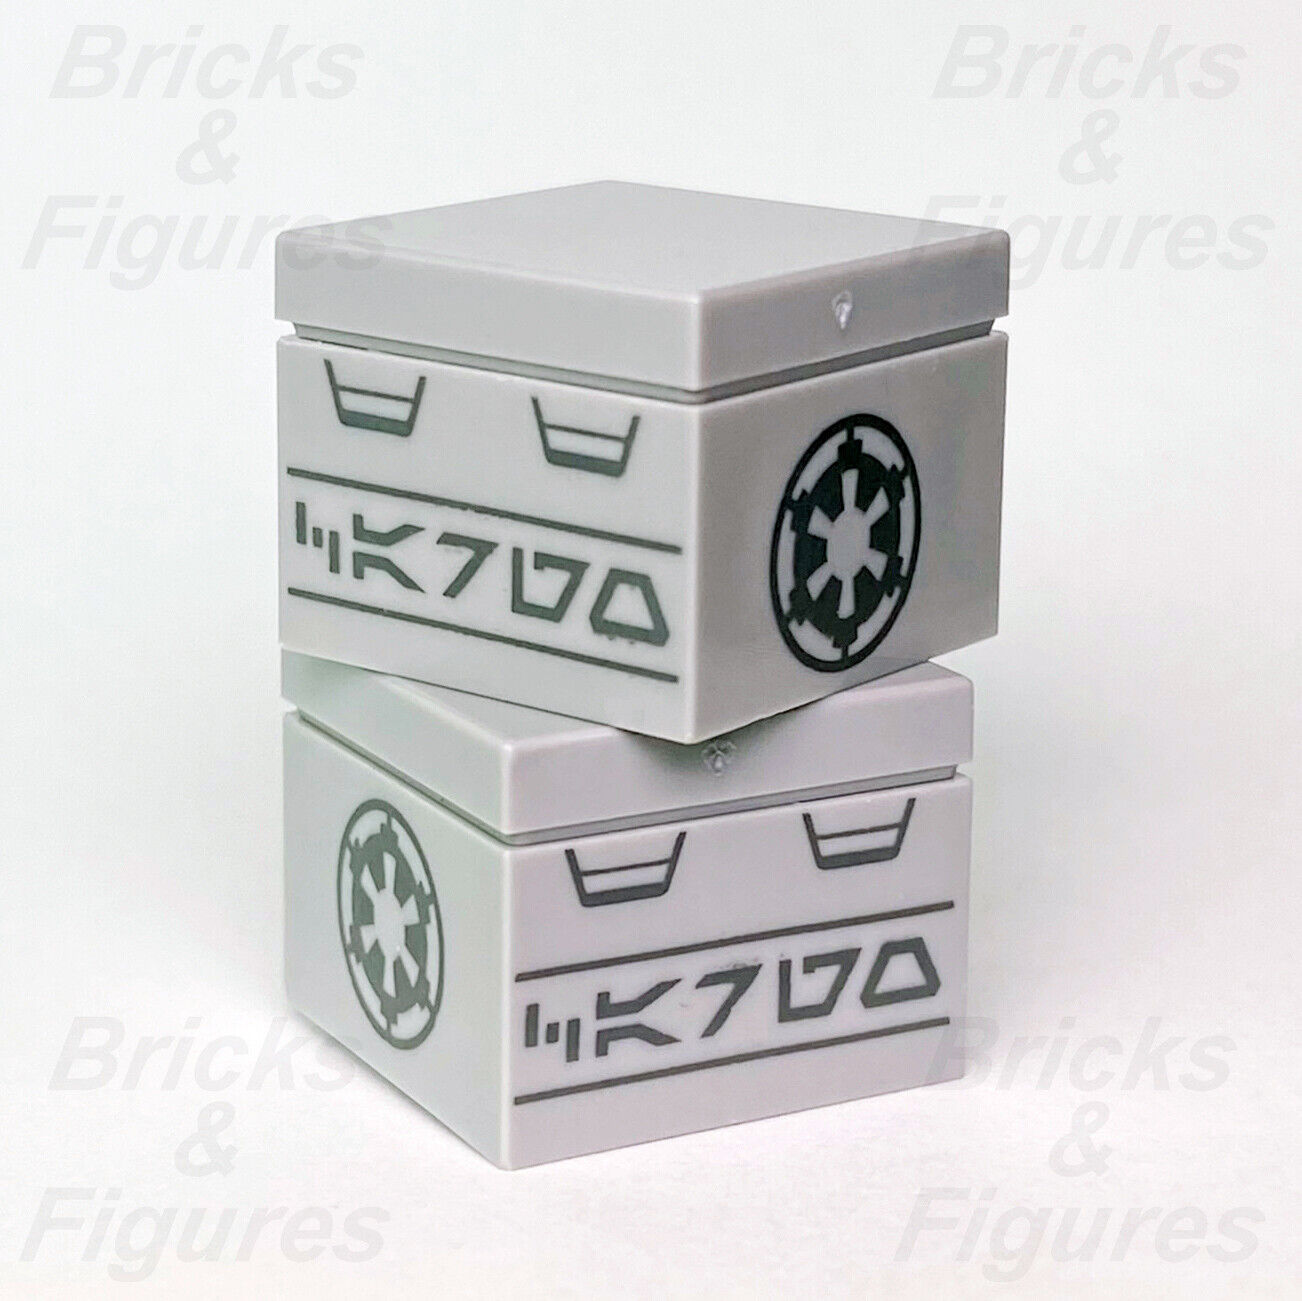 LEGO Star Wars Imperial Logo CARGO Container Aurebesh Box Parts 75311 75290 x 2